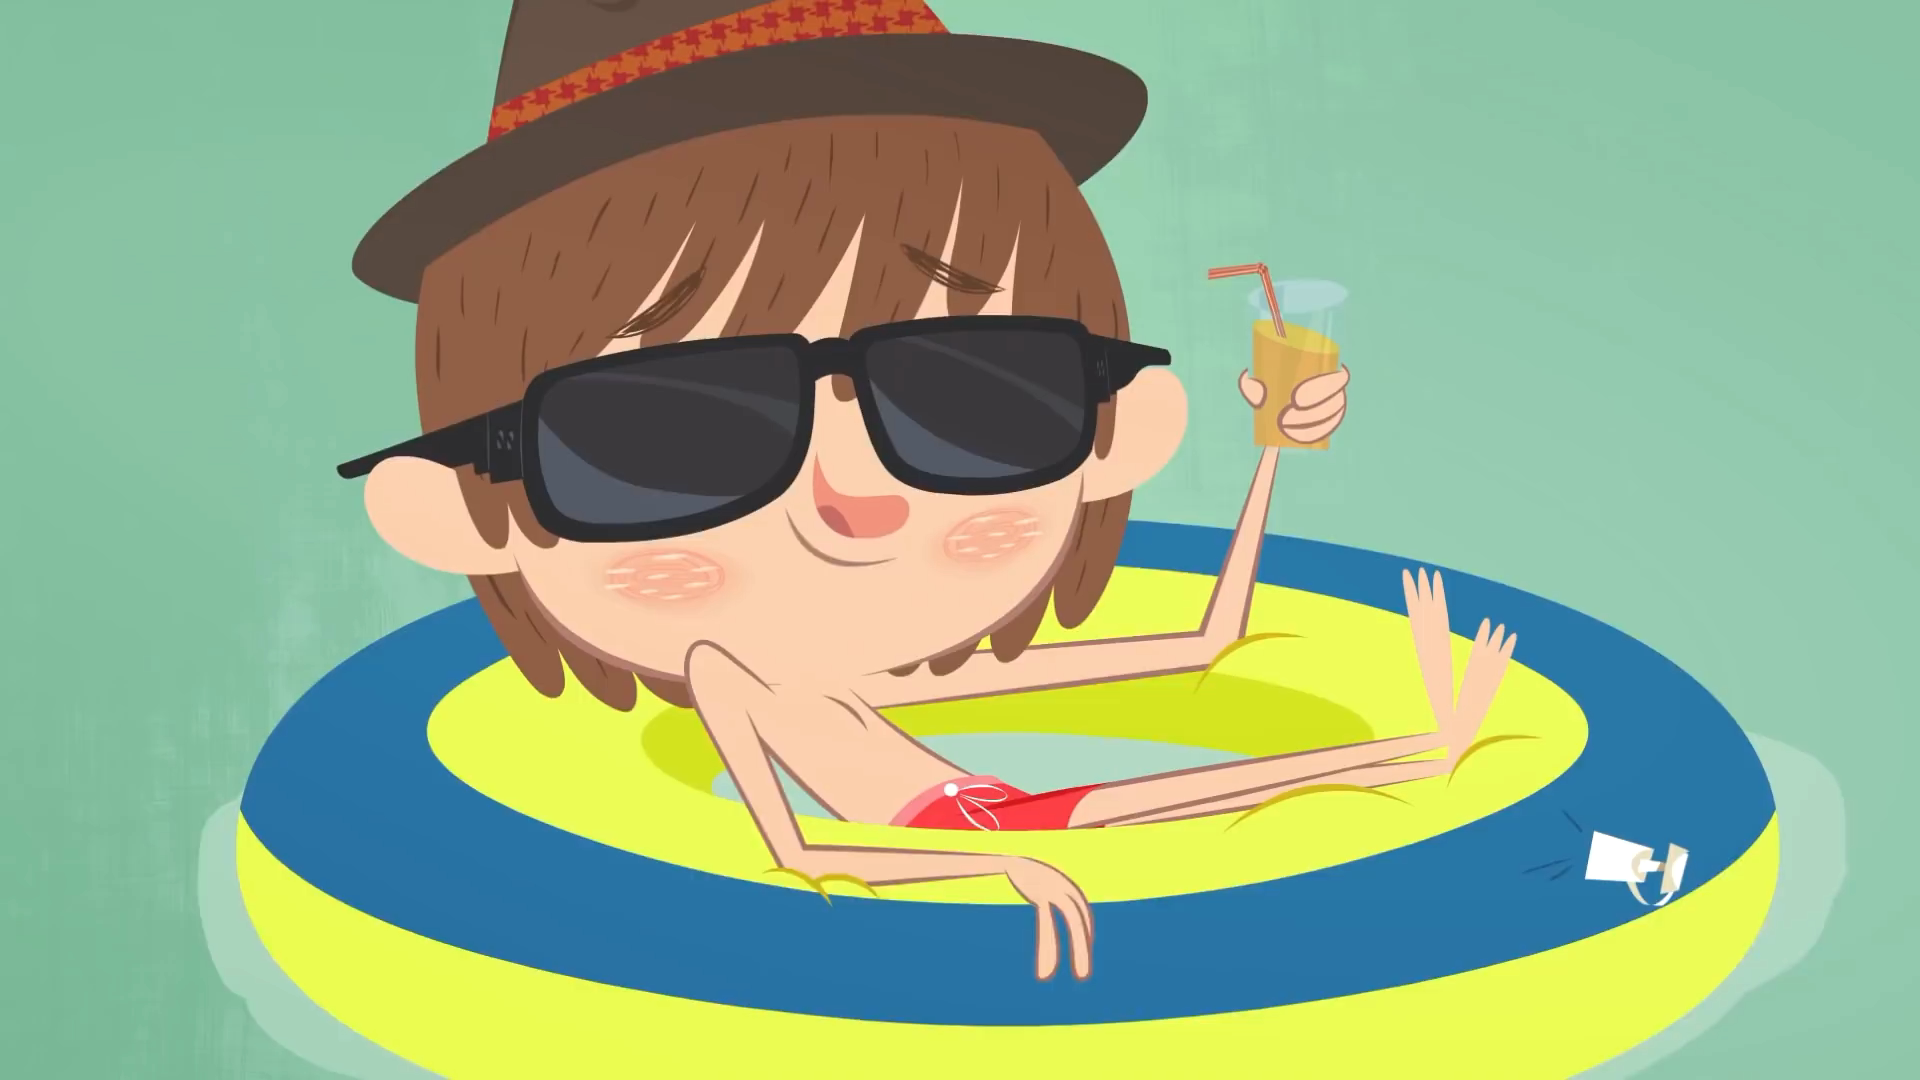 Shirtless Drawn Cartoon Boys: Matt in Swimming Trunks